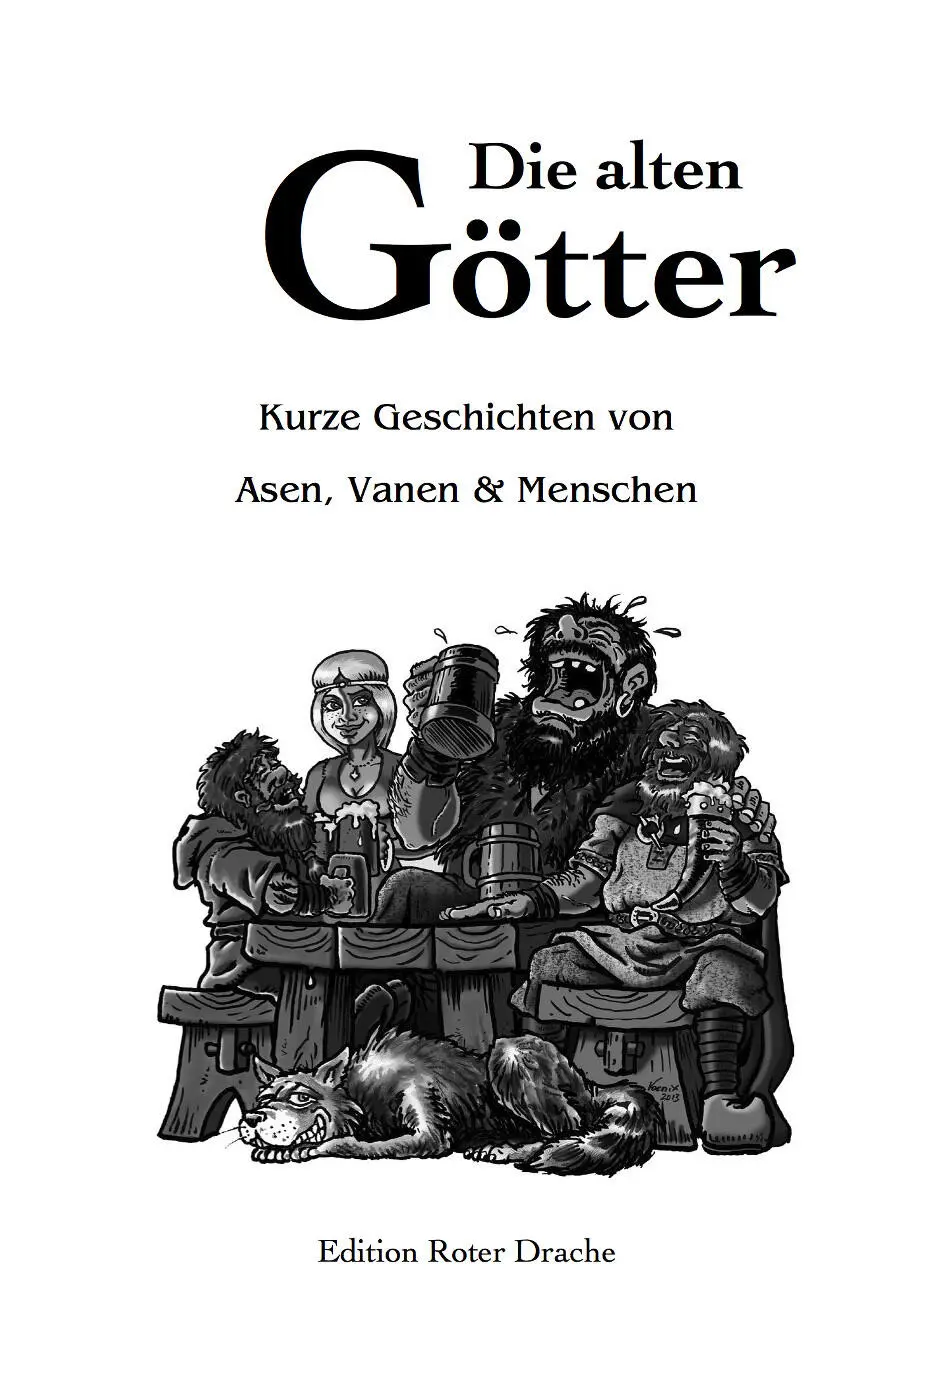 1 Auflage April 2014 Copyright 2014 by Edition Roter Drache für die - фото 1